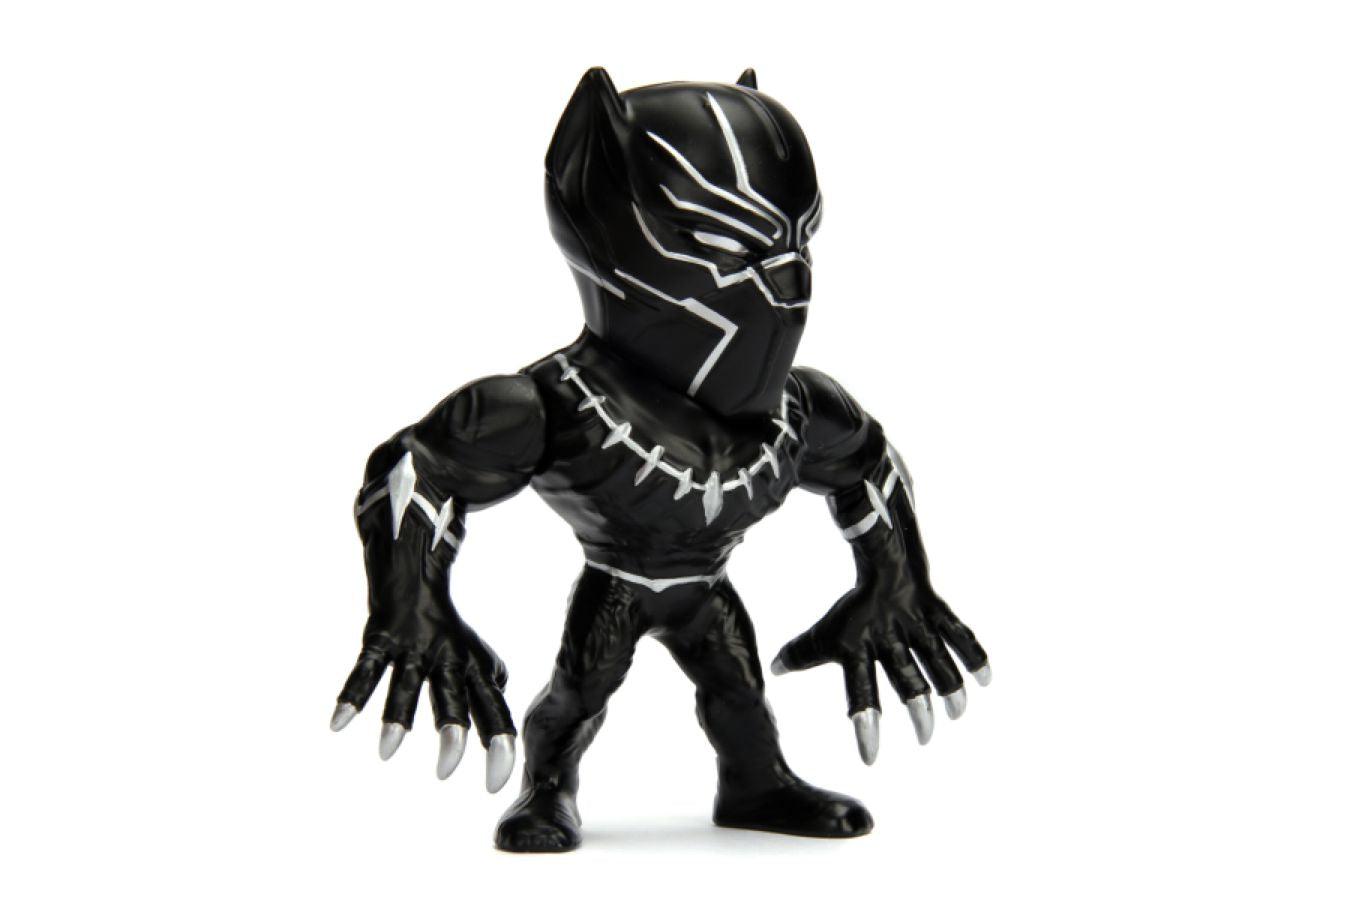 JAD97782 Avengers - Black Panther 4" Diecast MetalFig - Jada Toys - Titan Pop Culture